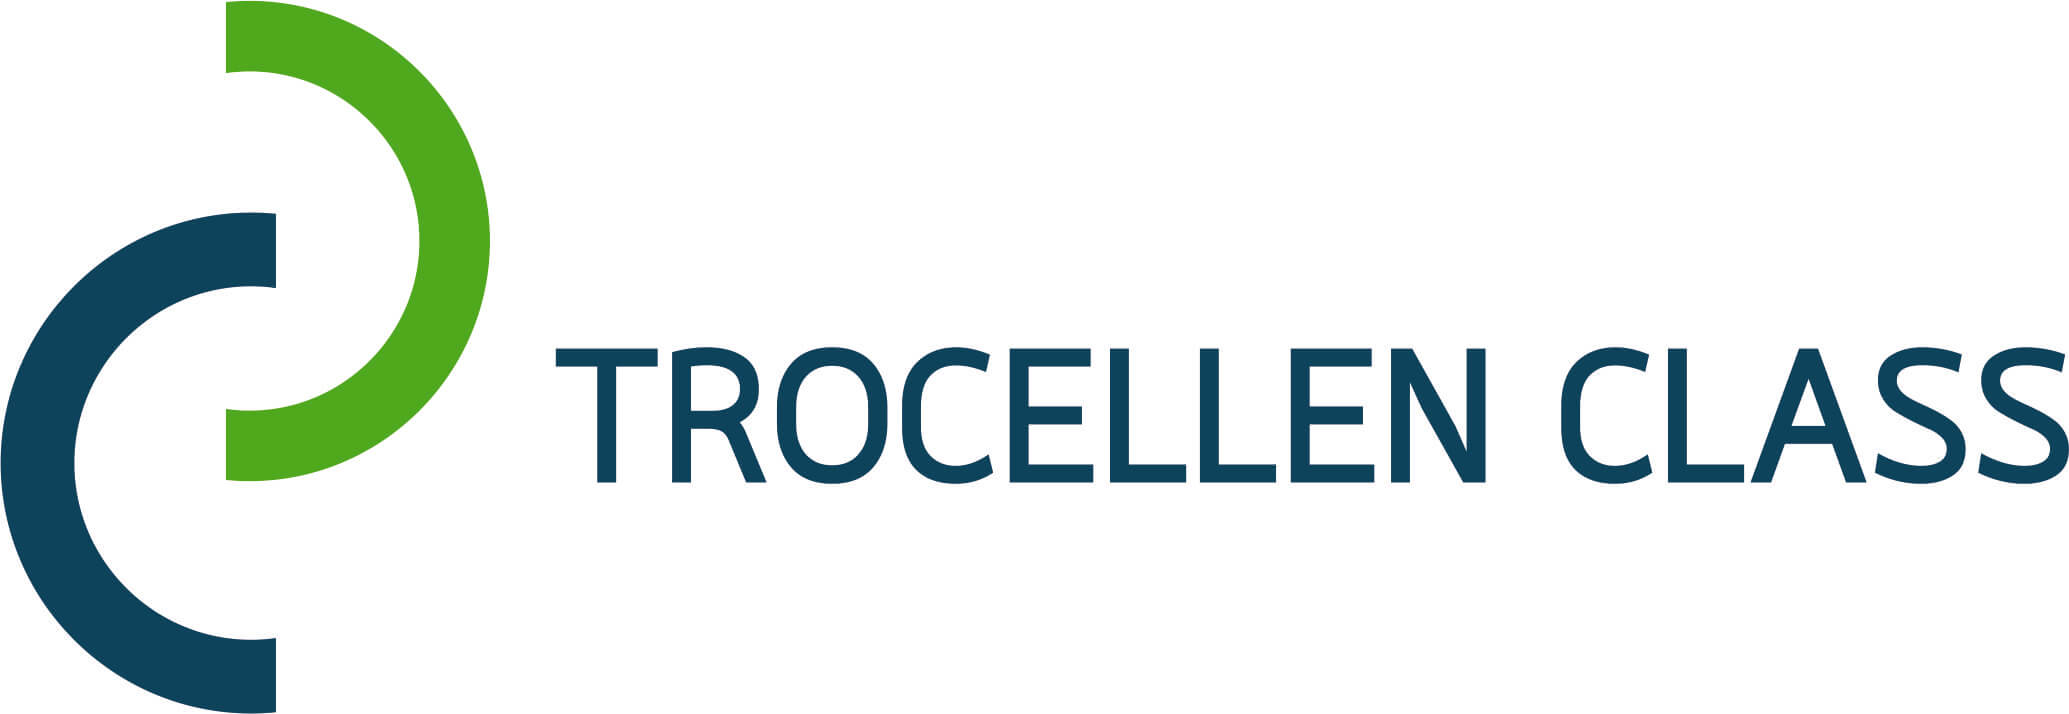 Trocellen Class = Efficient Air Duct Insulation